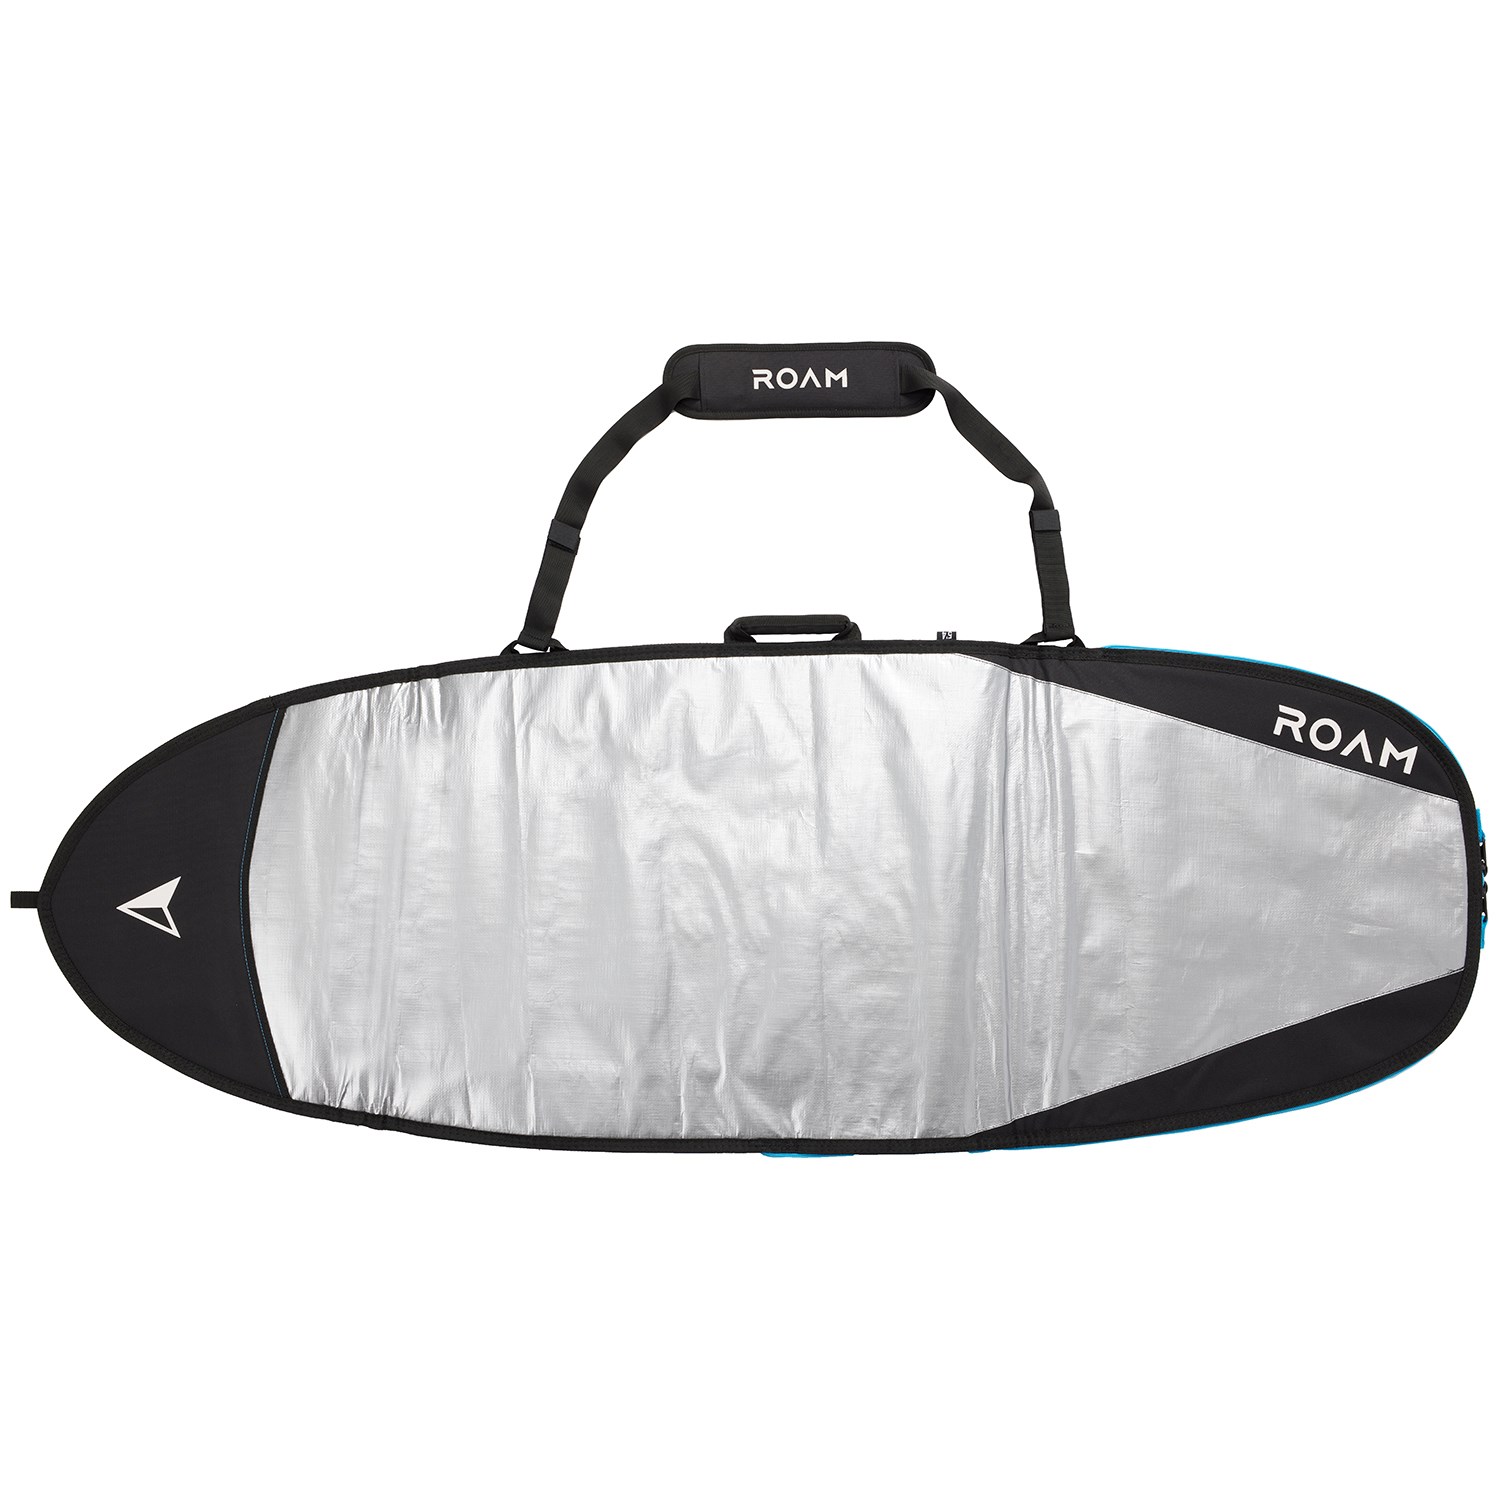 Roam Daylight Hybrid Surfboard Bag, 6' 0